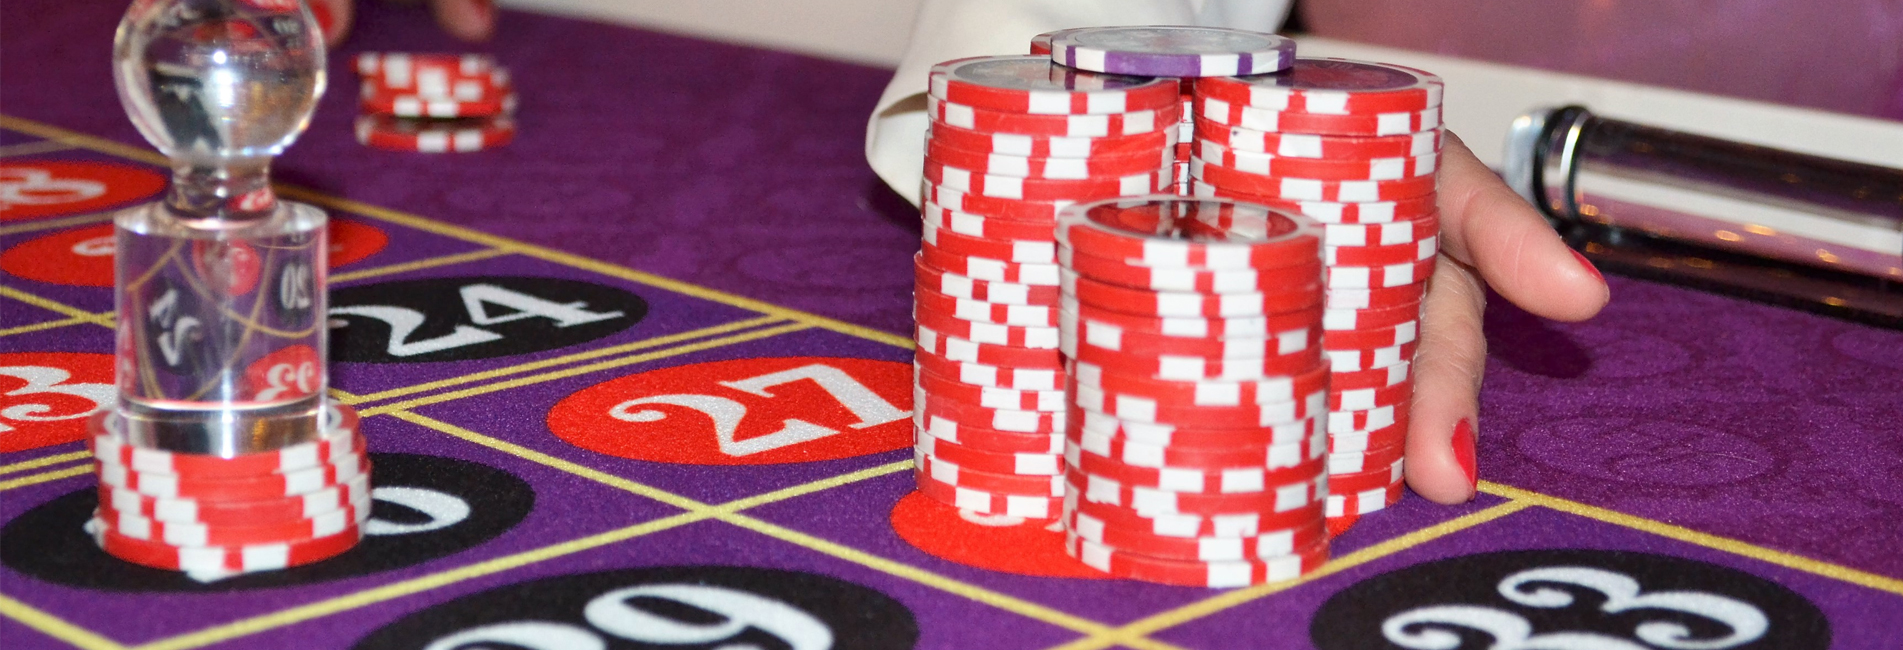 Casino Party Hire Perth, Casino Tables Yanchep, James Bond Casino Hire Mandurah